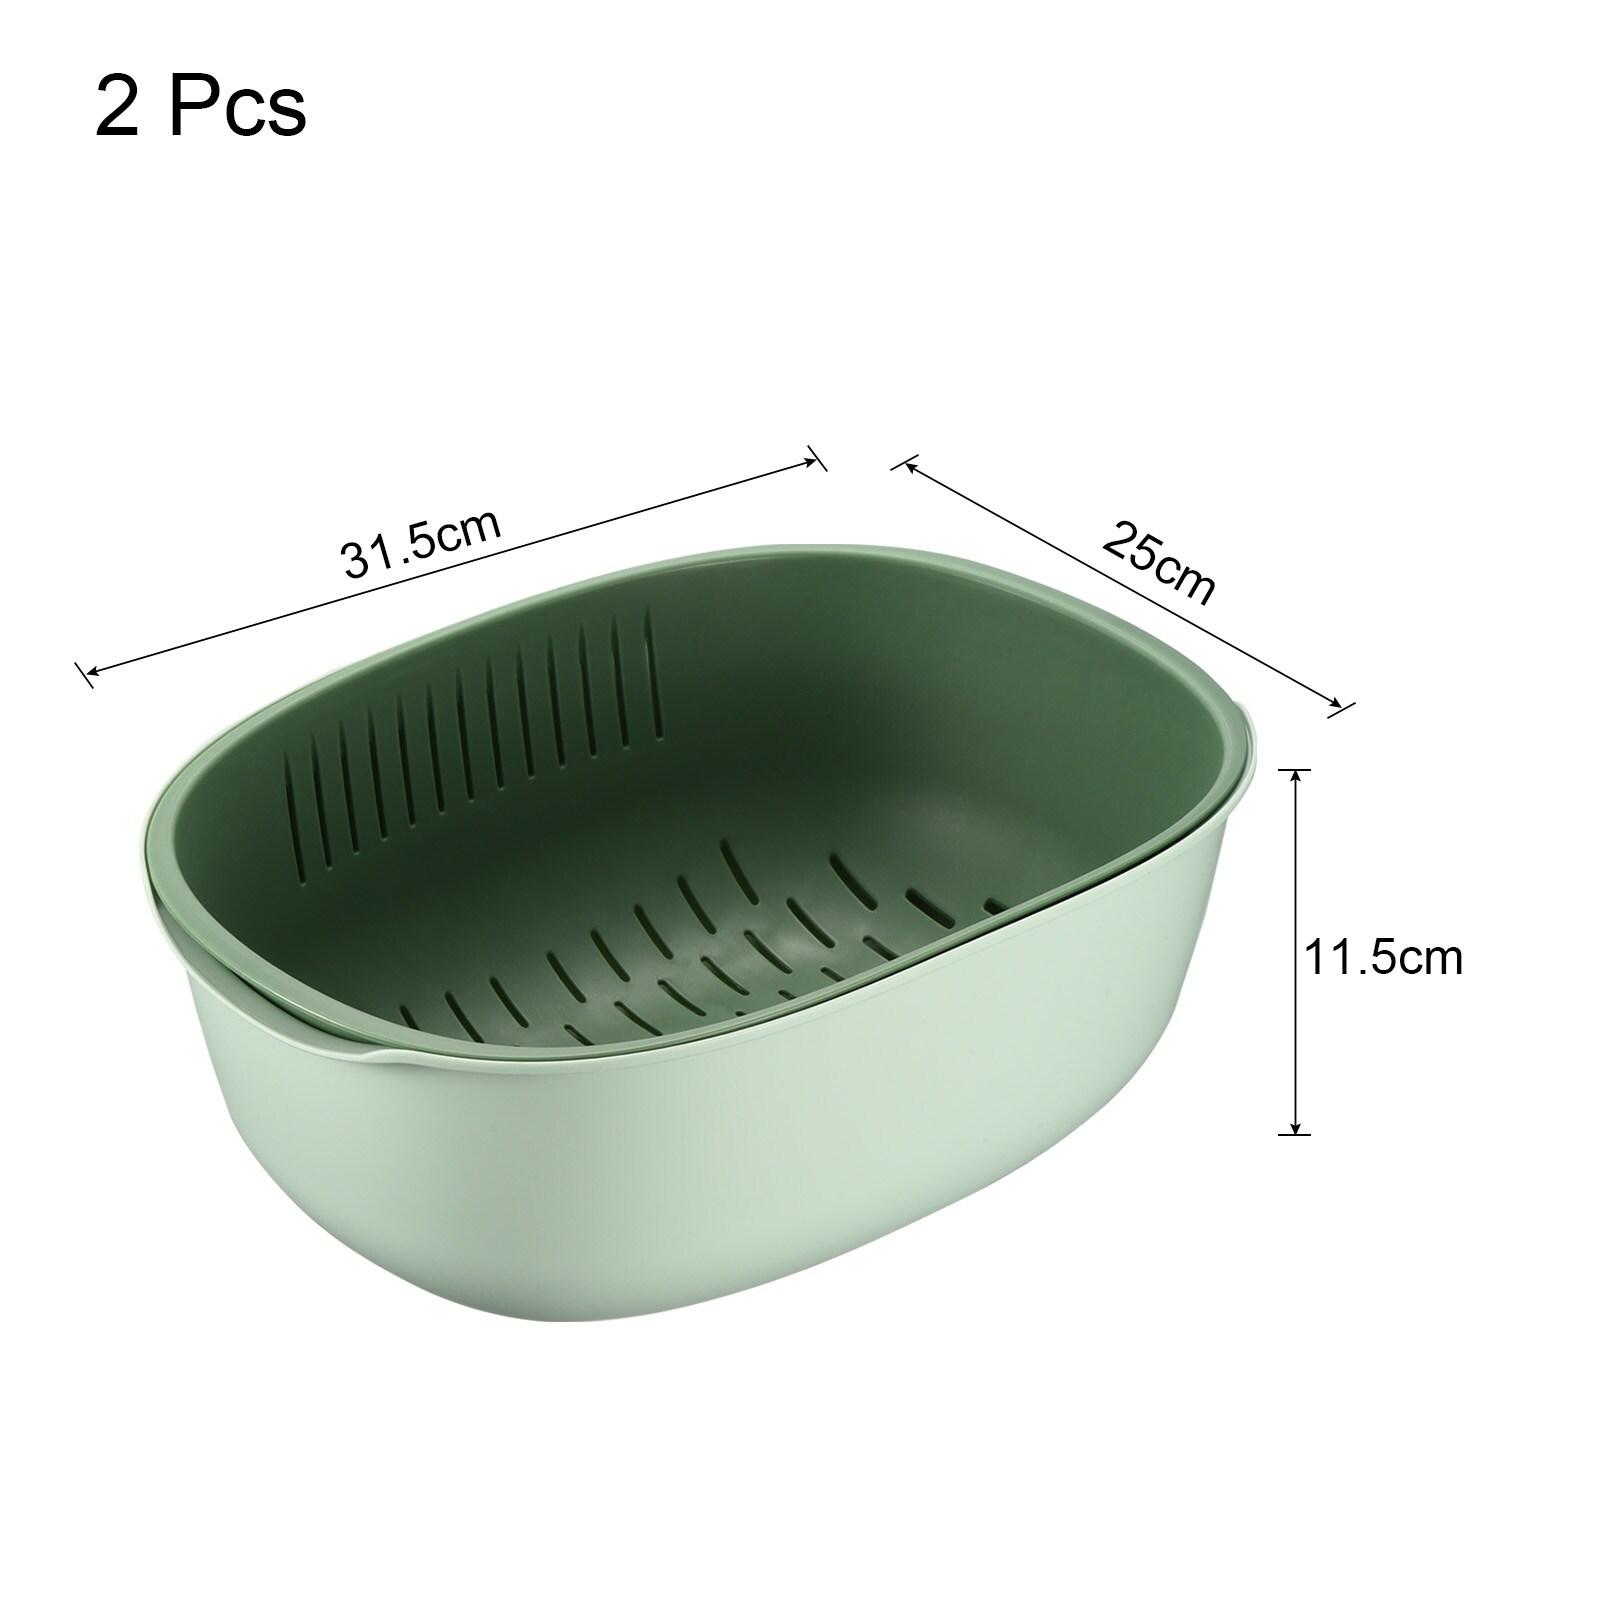 Kitchen Colander Bowl Strainers, Plastic Double Layered Drain Basket - 31.5 x 25 x 11.5 cm